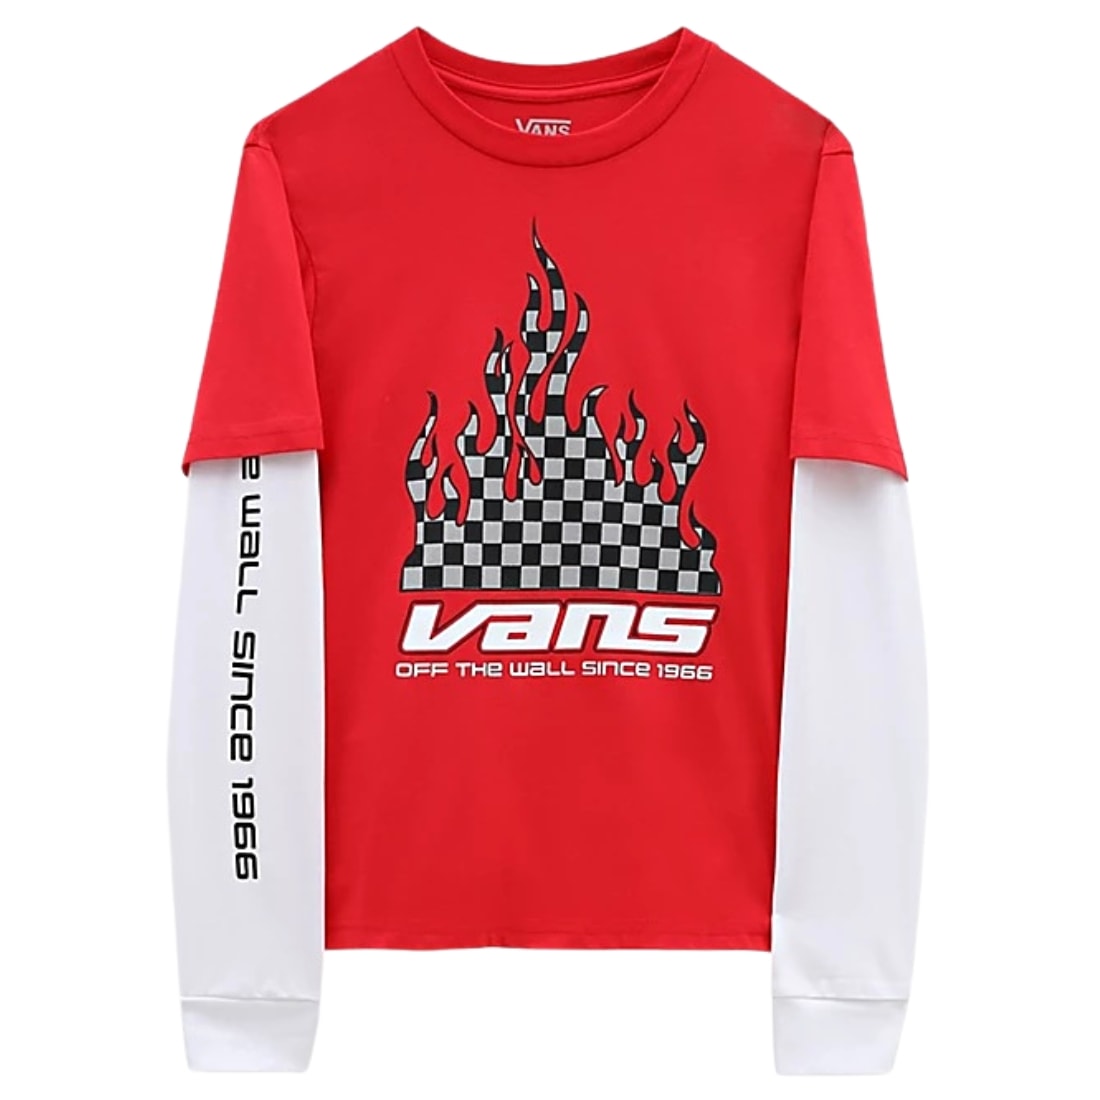 Vans Kids Reflective Checkerboard Boys Twofer Longsleeve T-Shirt - True Red - Boys Surf Brand T-Shirt by Vans